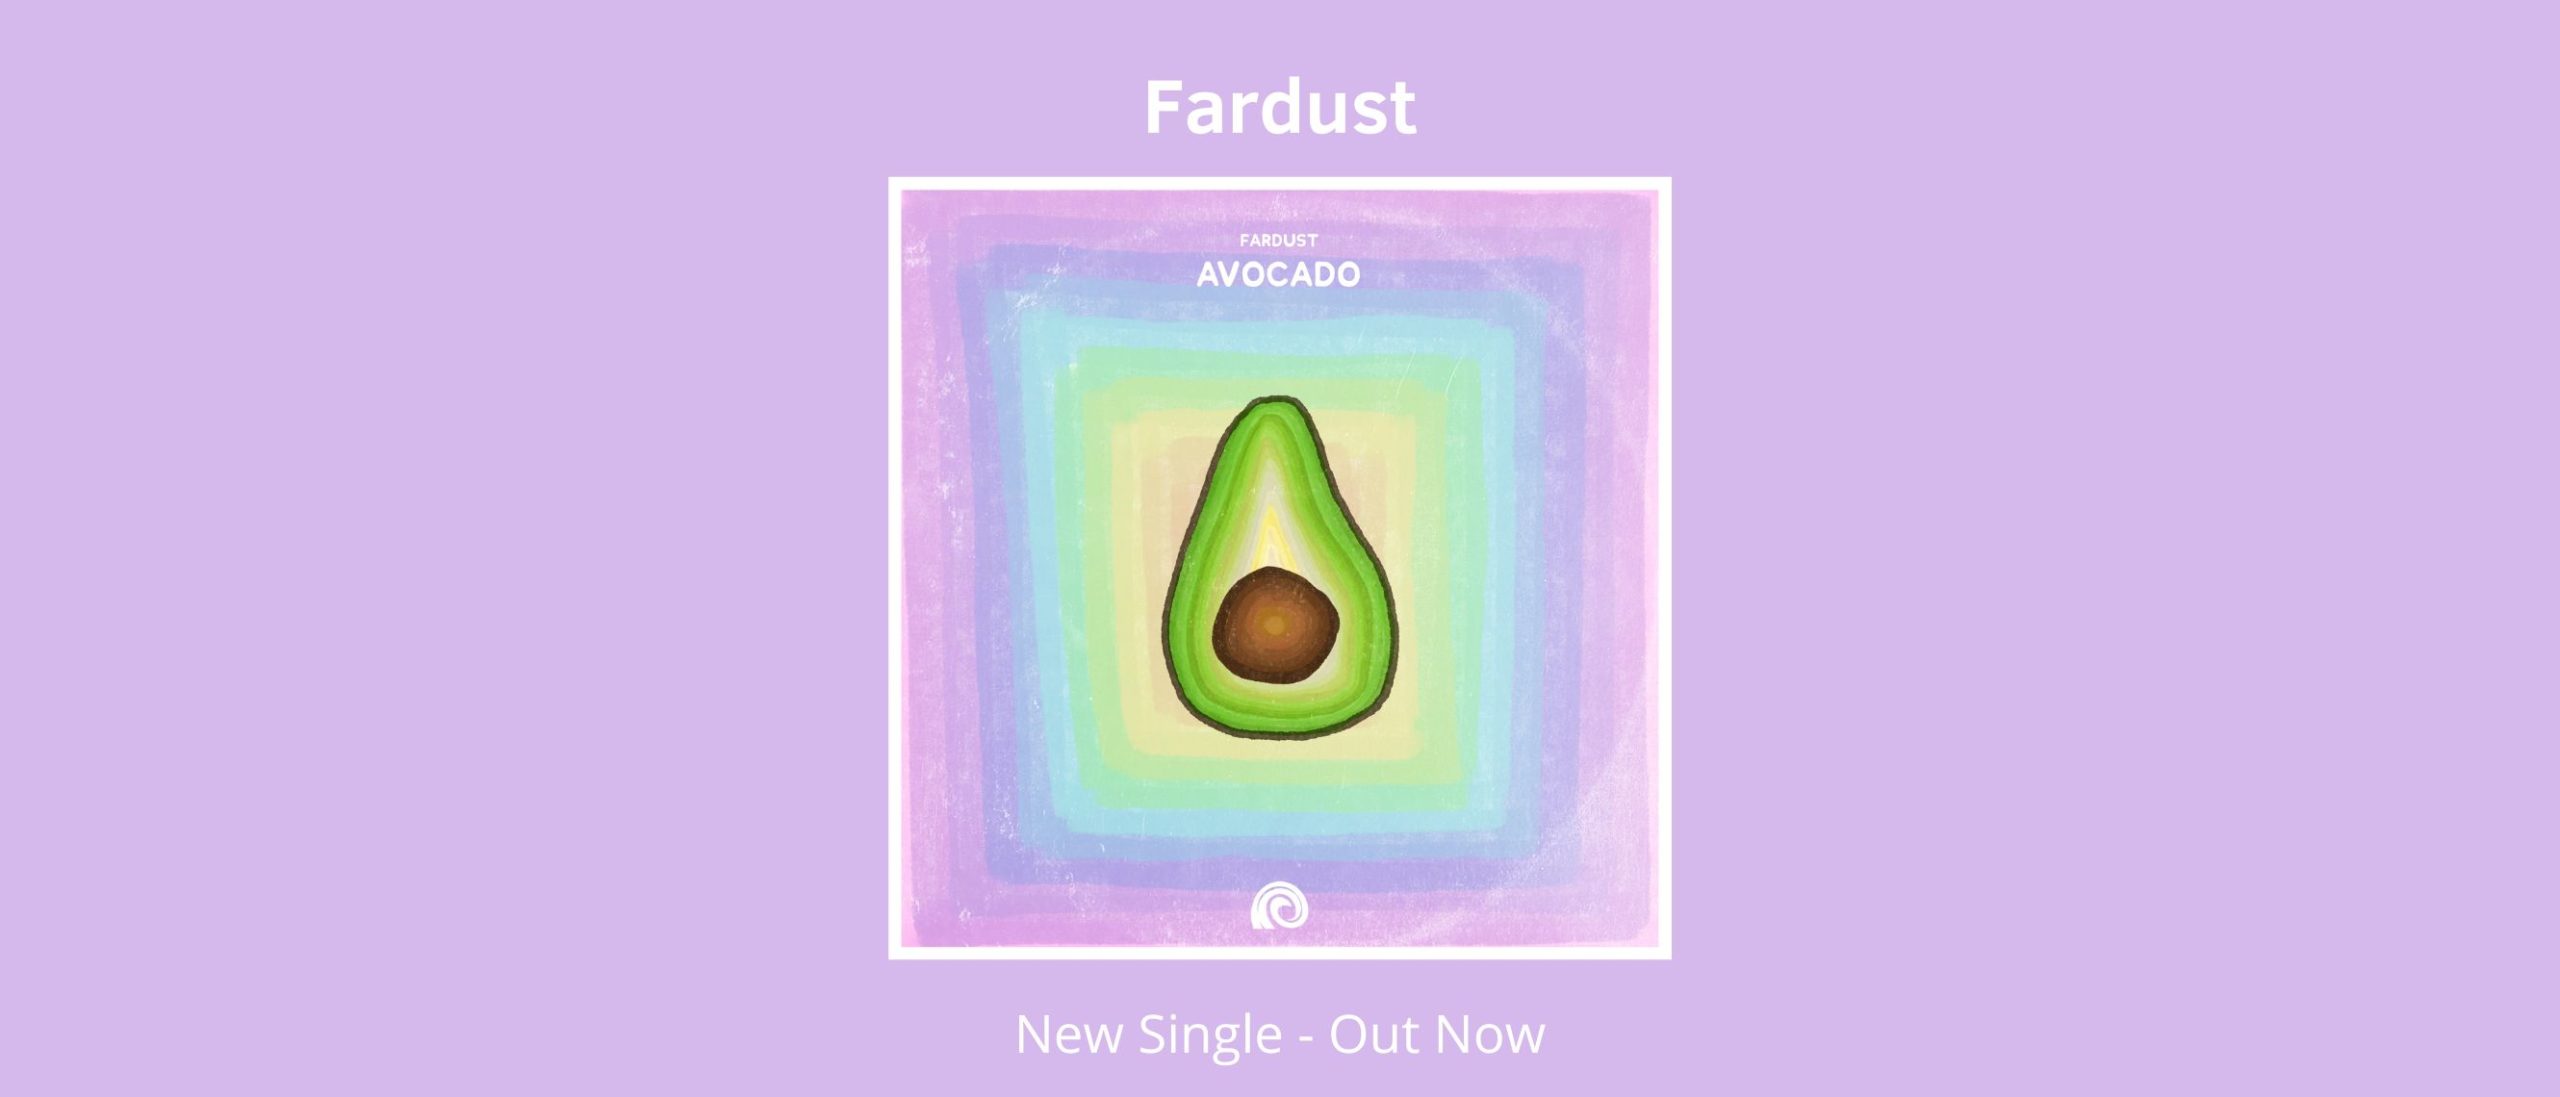 Fardust - avocado cover idm chill electro house music